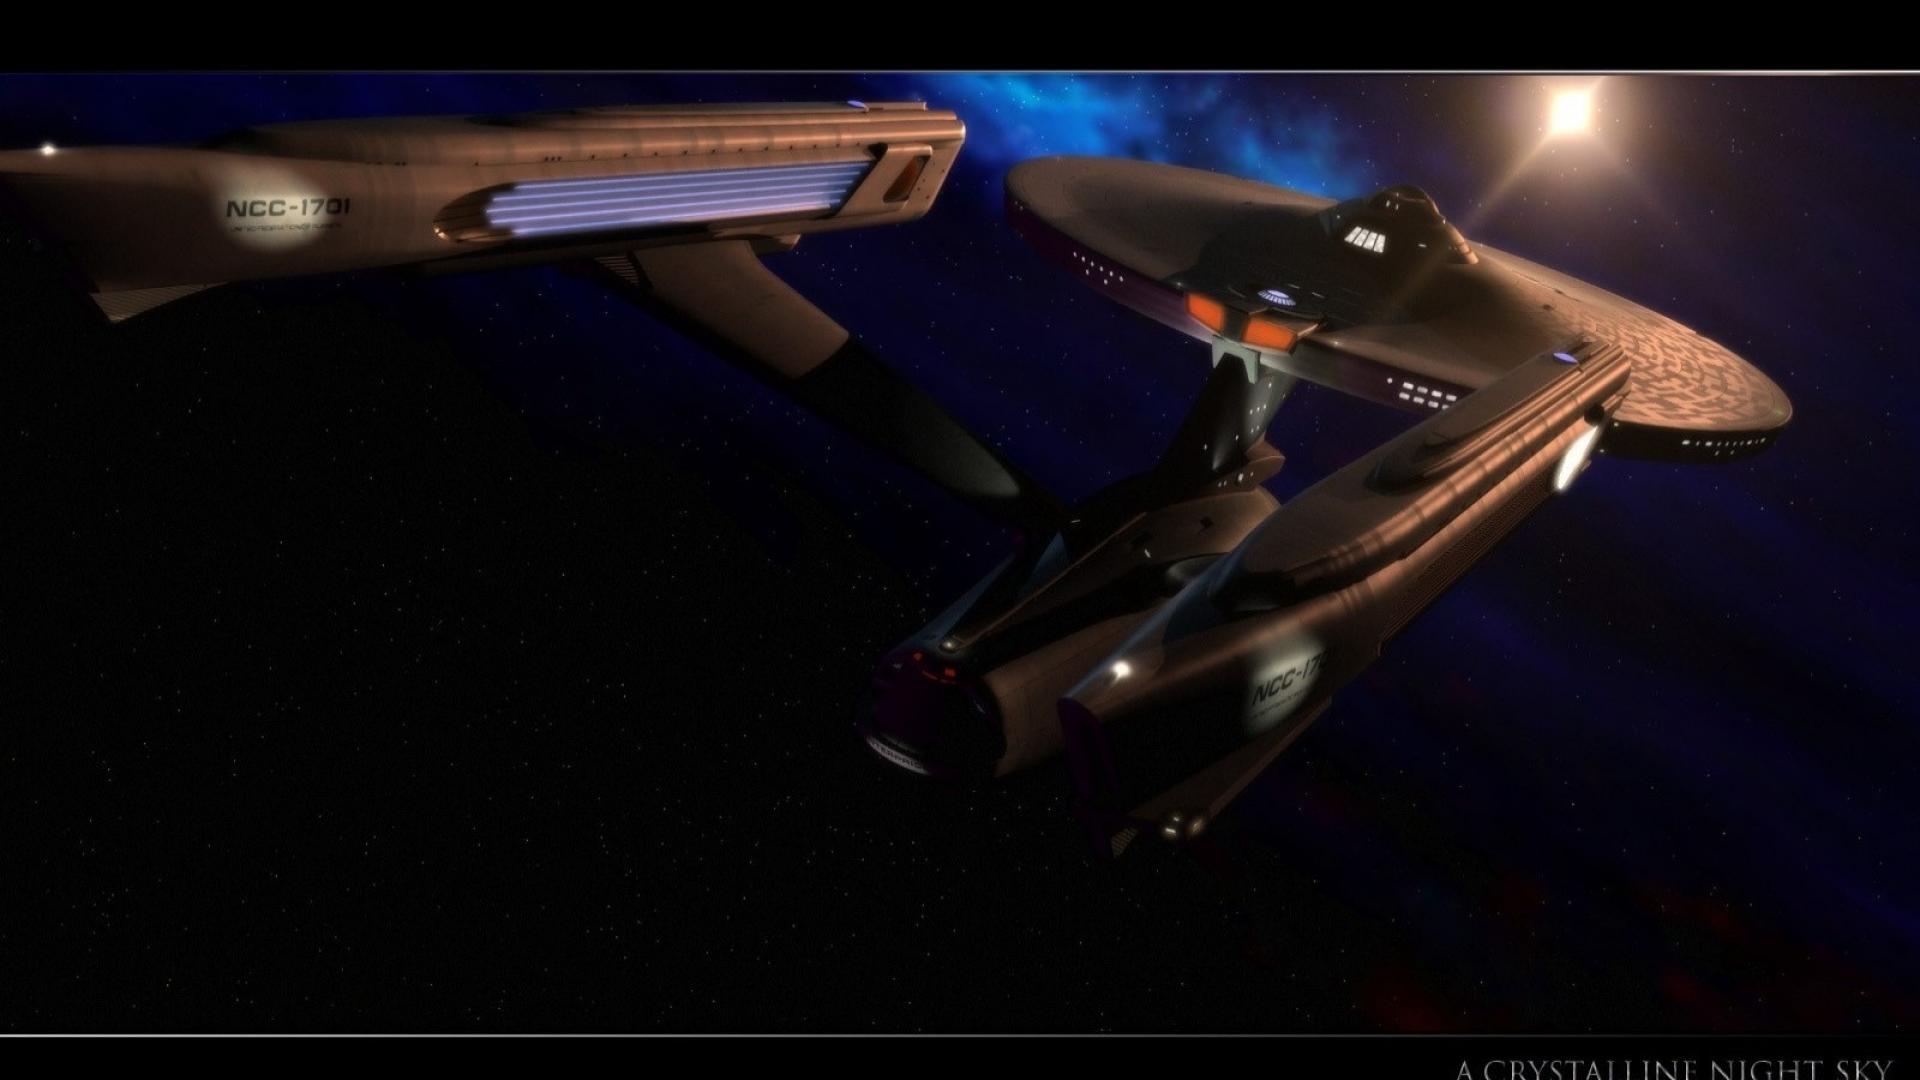 Star Trek Uss Enterprise Spaceships Vehicles Wallpaper Hq